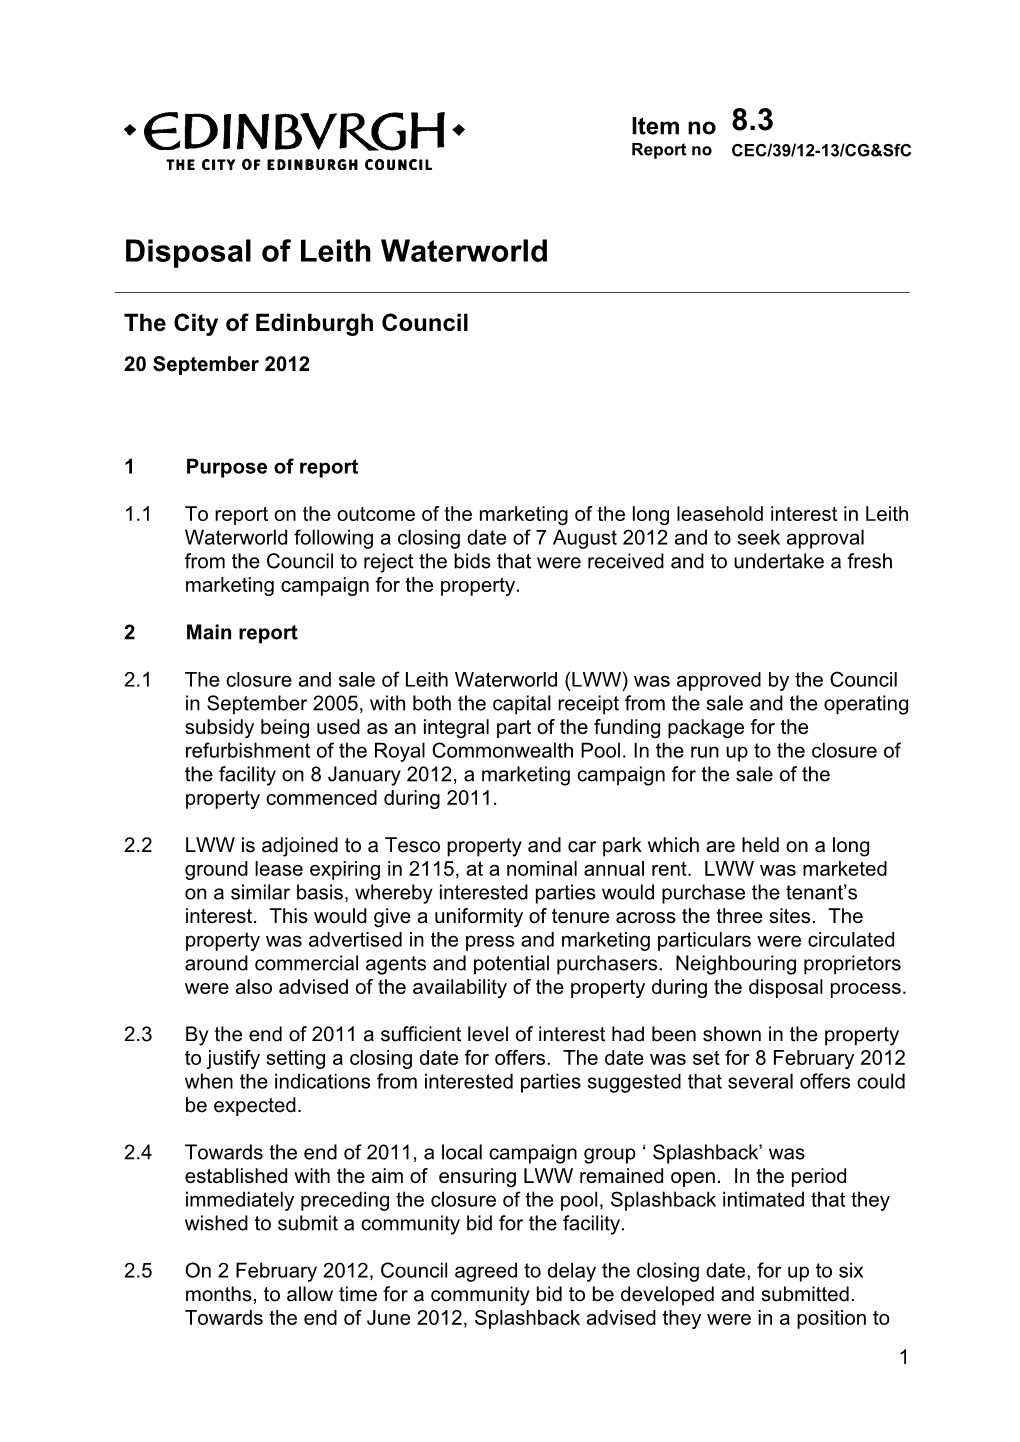 Disposal of Leith Waterworld